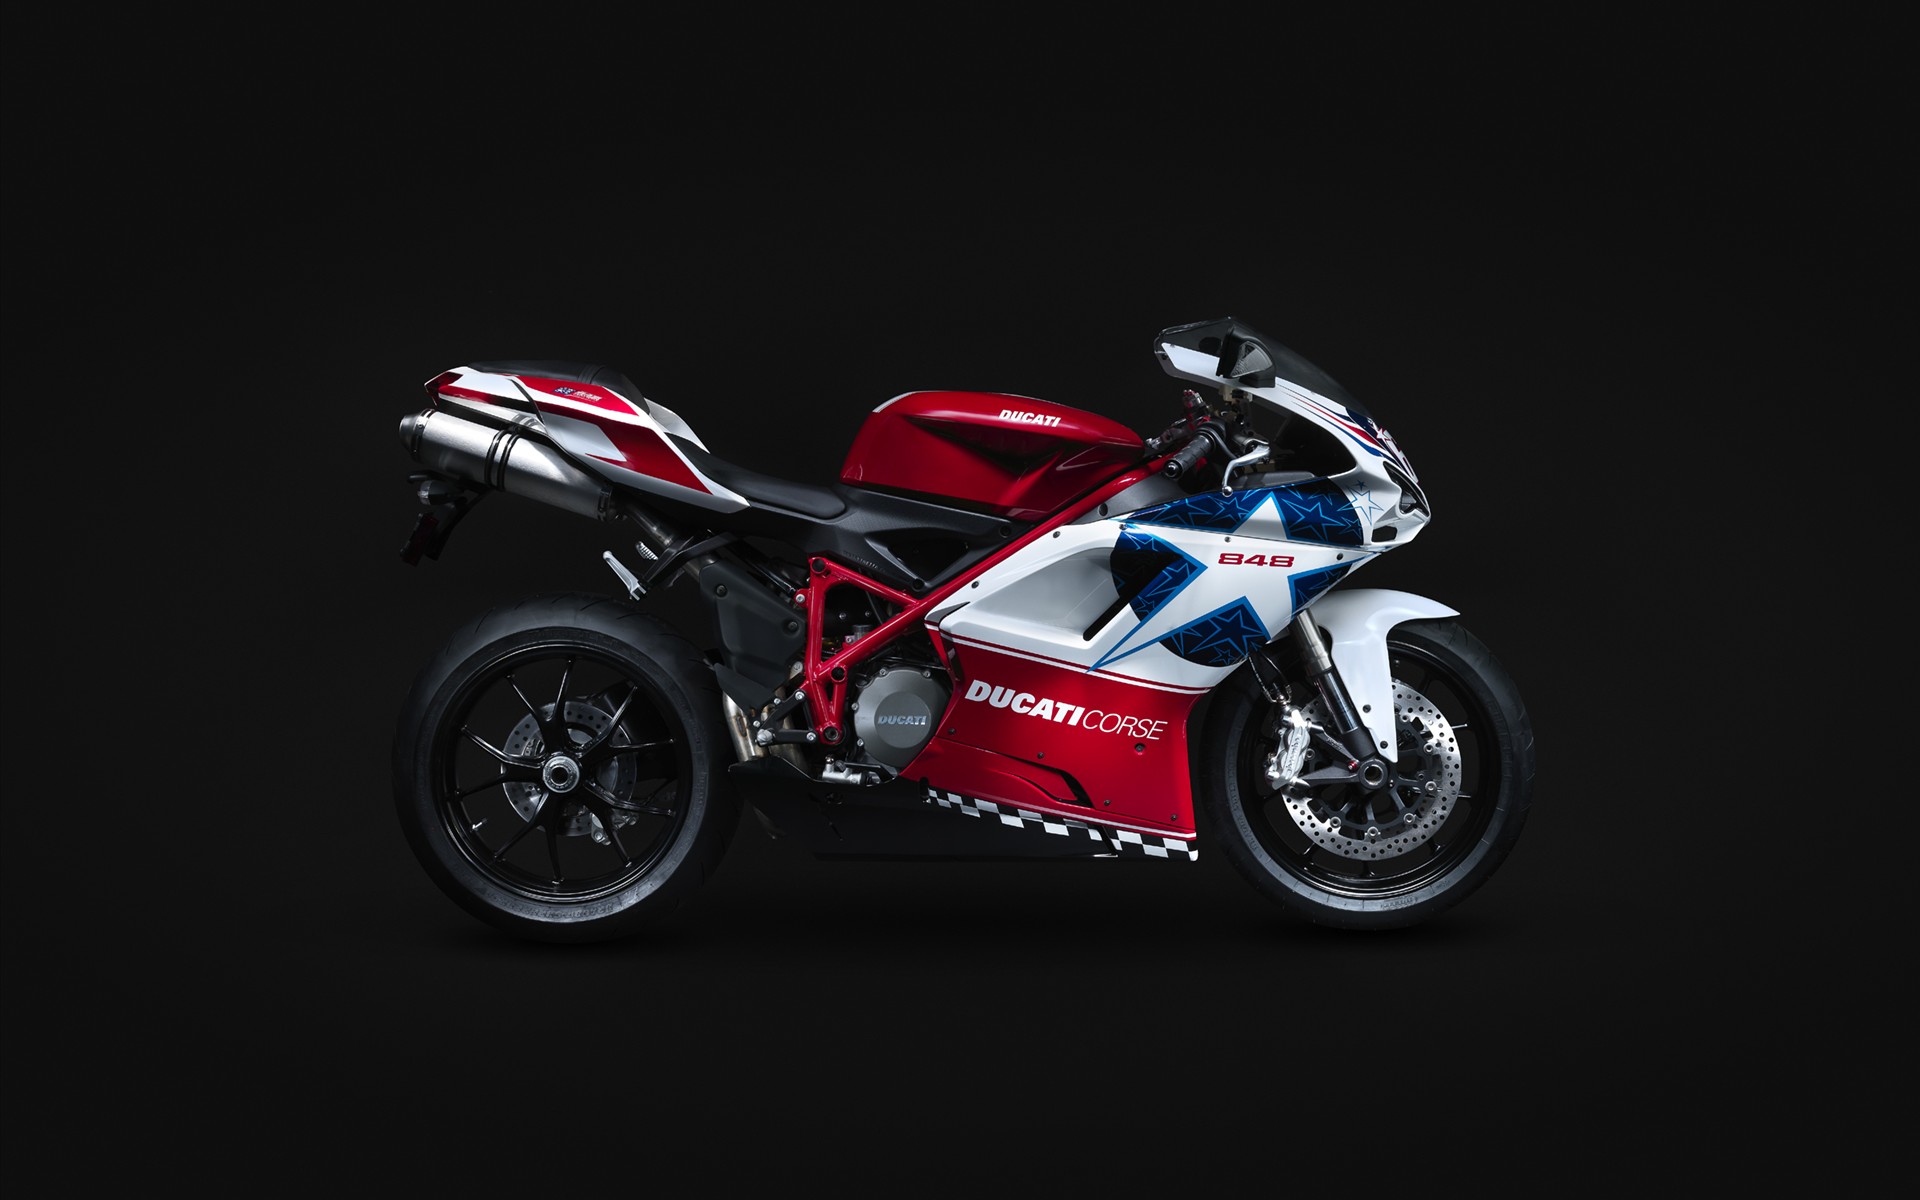 Ducati 848 Widescreen Wallpapers HD Wallpapers